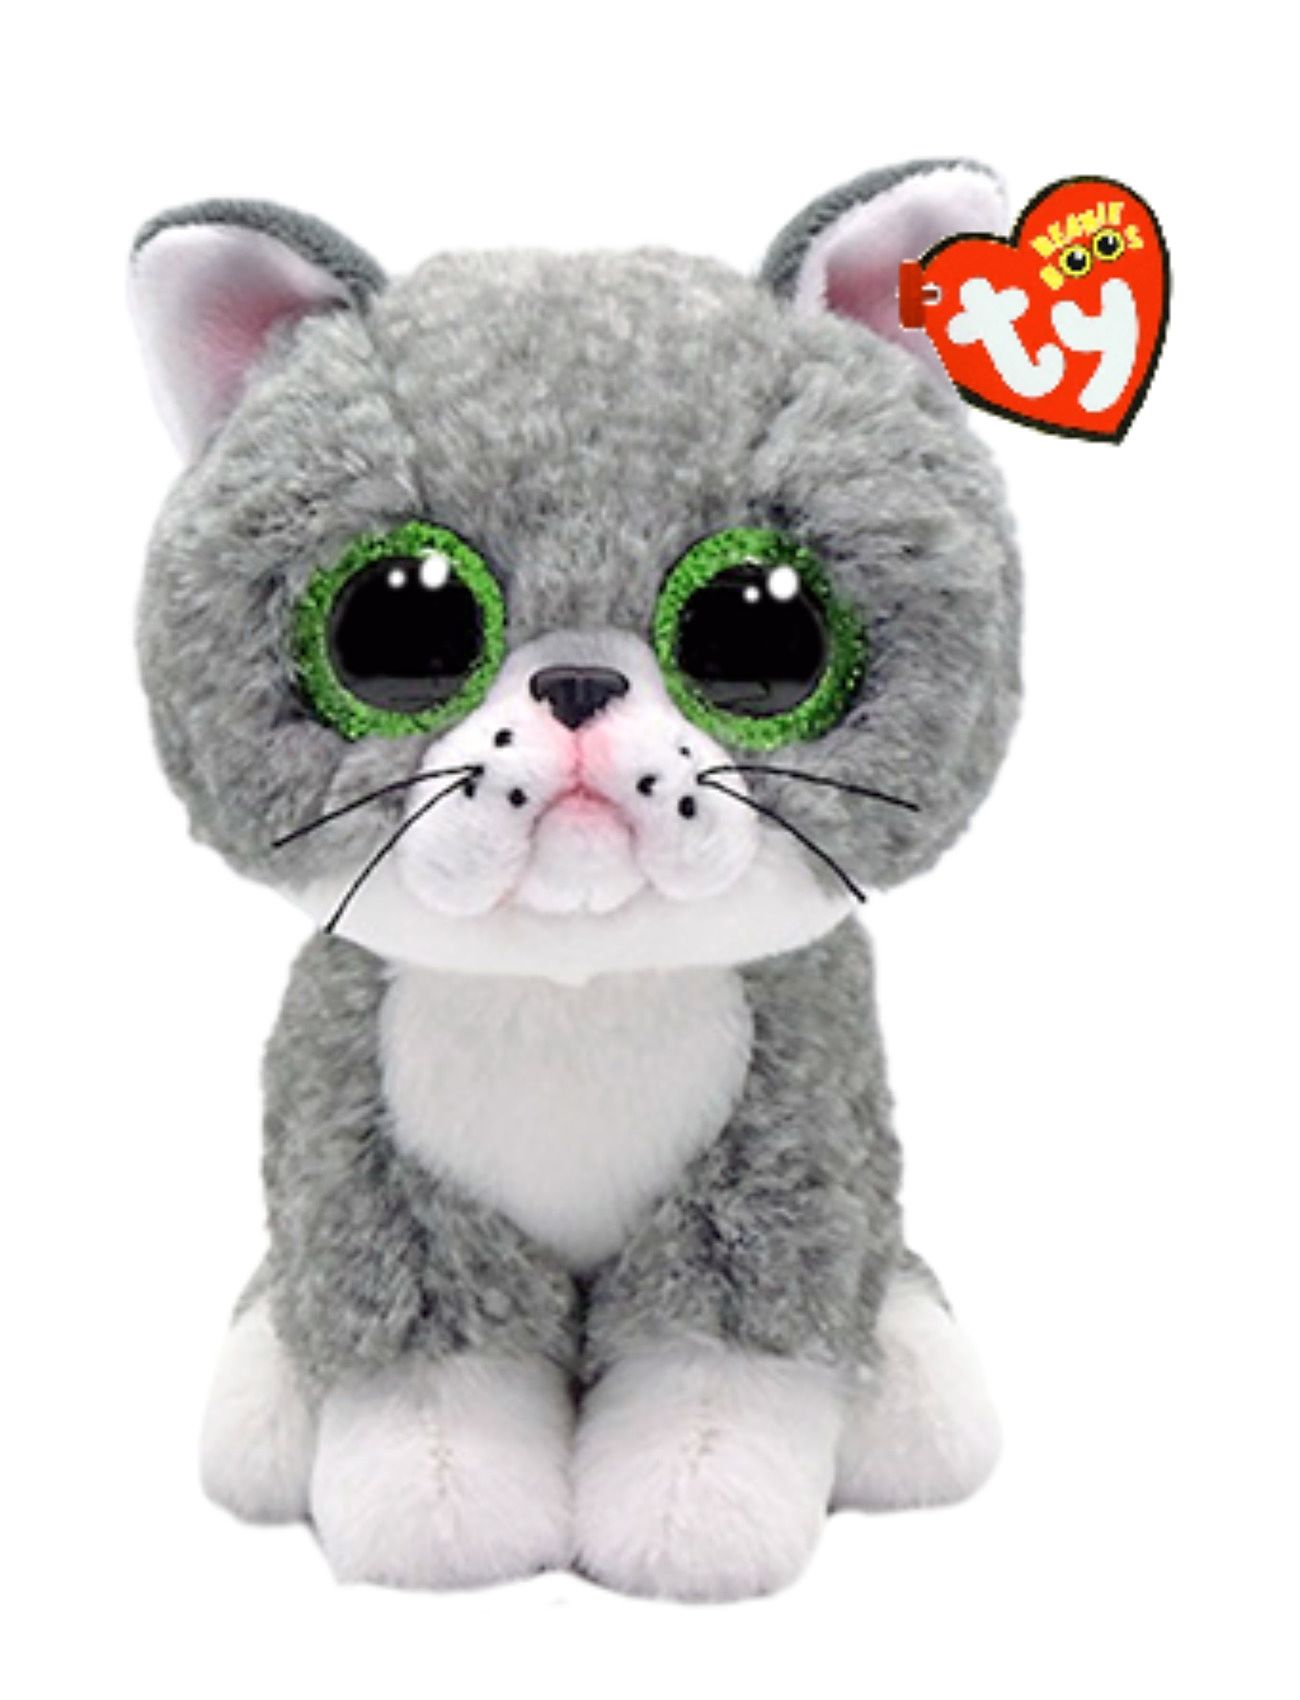 Fergus - Gray Cat Reg Toys Soft Toys Stuffed Animals Multi/patterned TY